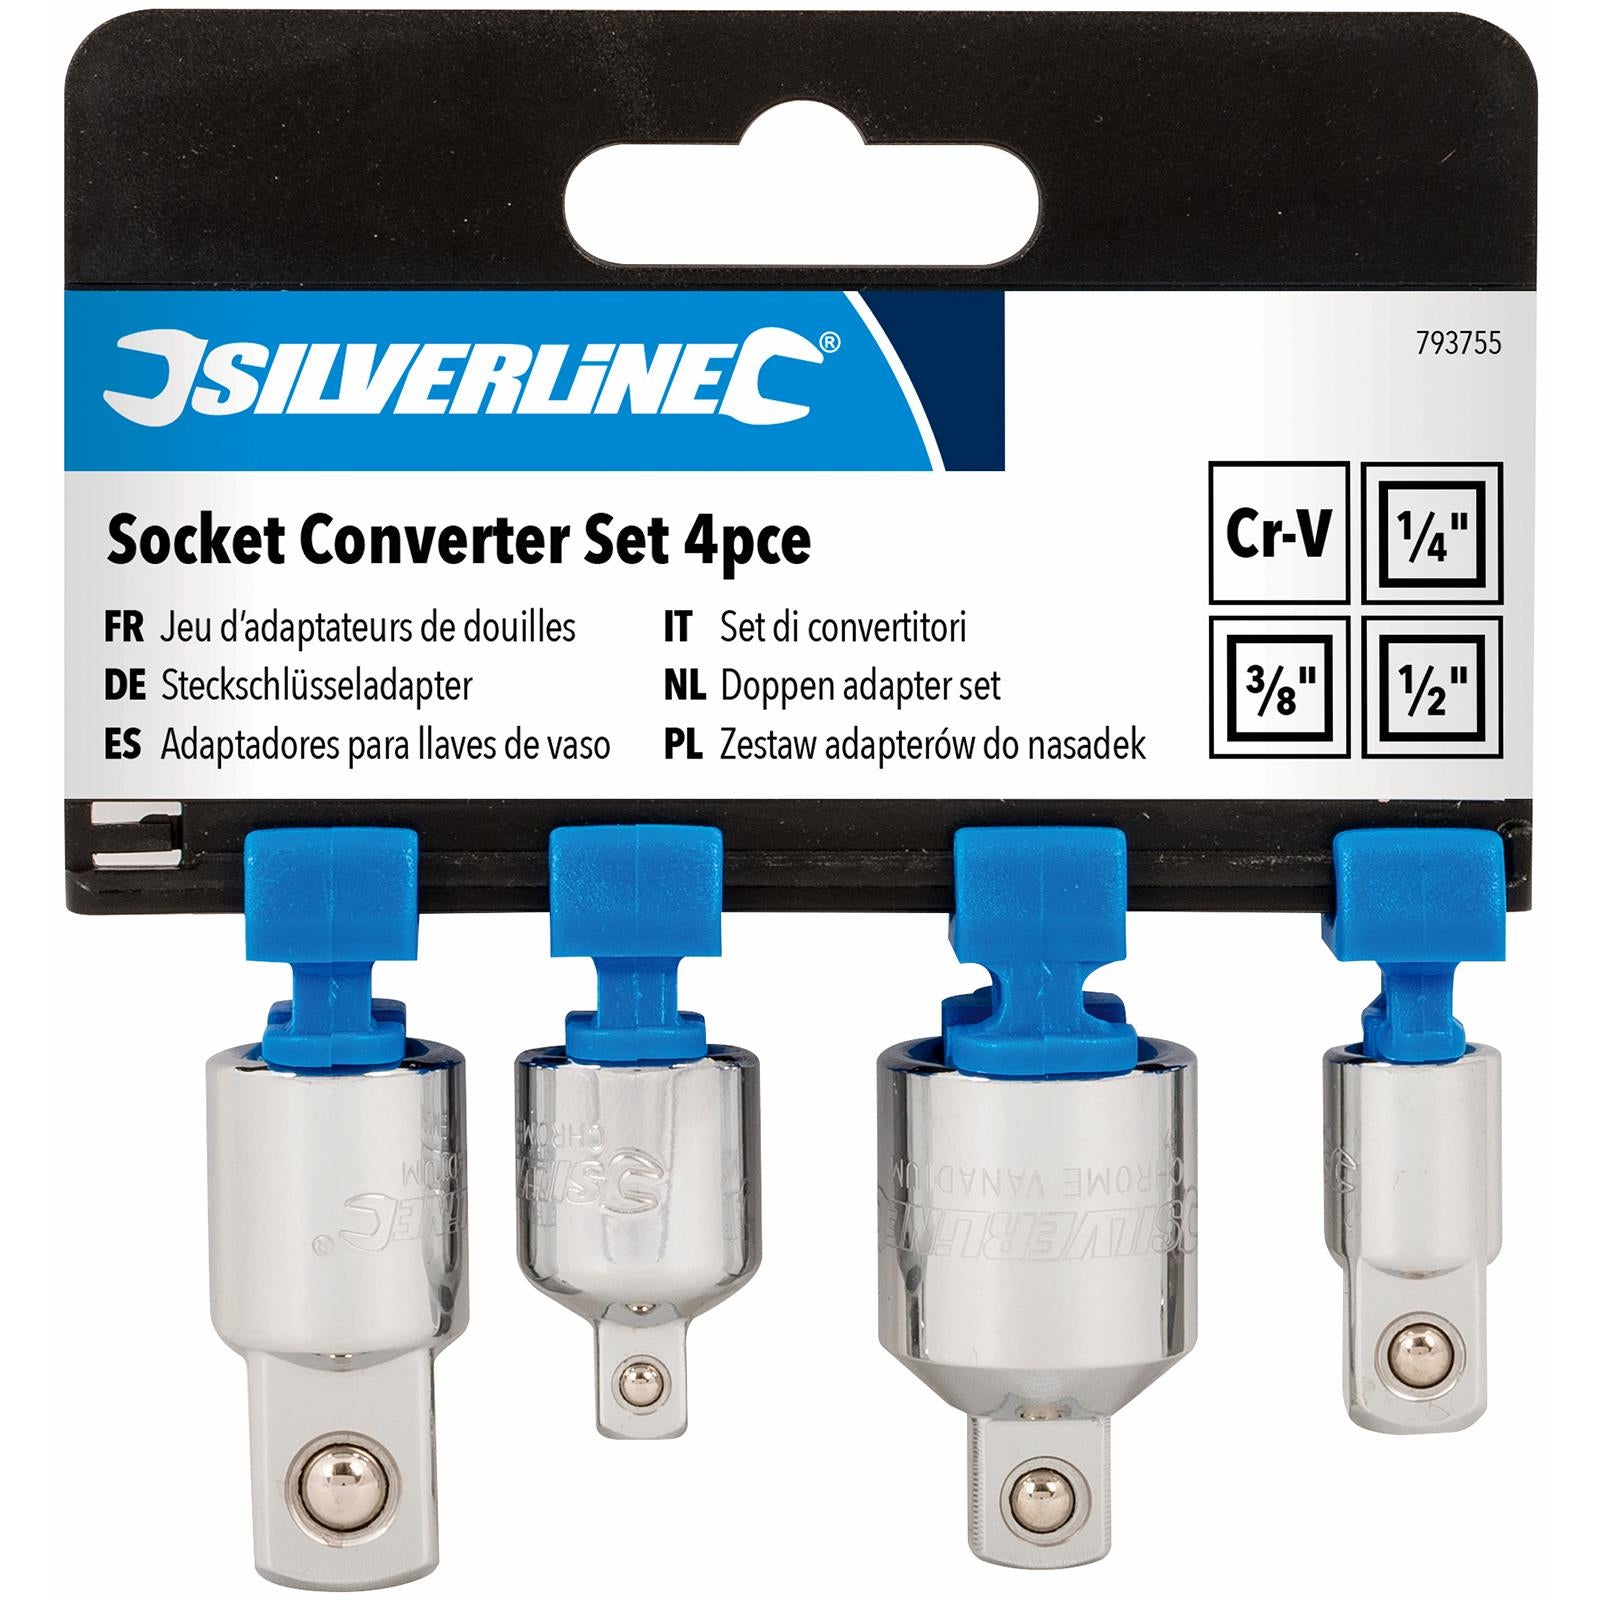 Silverline 4 Piece Socket Converter Set Adaptor Reducer 1/4" 3/8" 1/2" Female Male